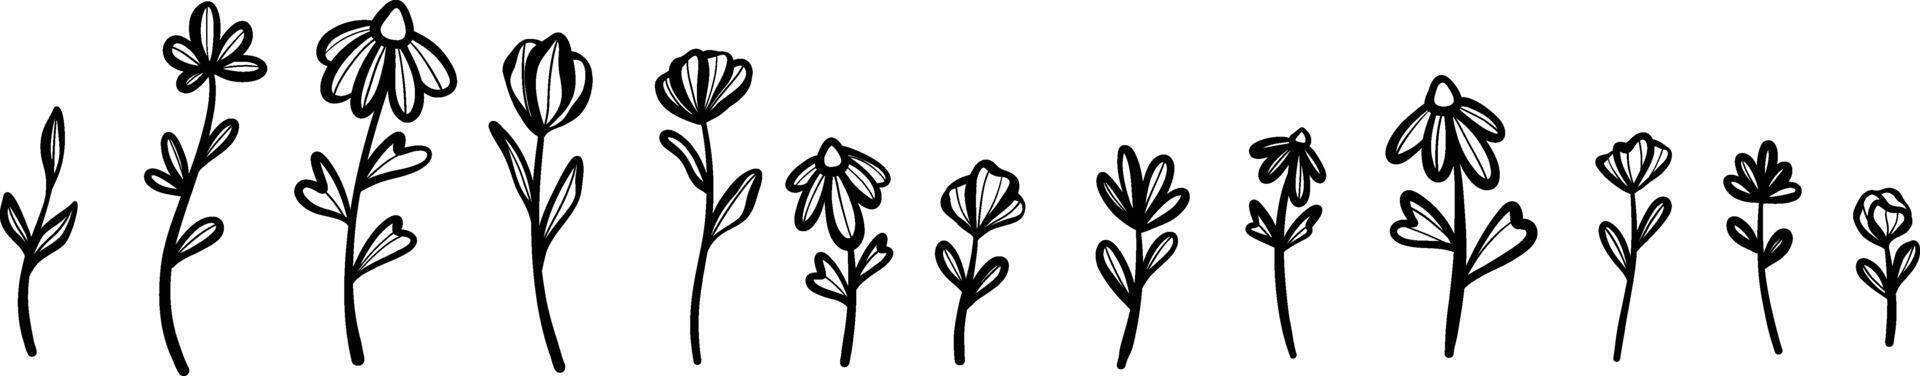 Flower illustration set, plant clip art, floral doodle set isolated spring graphic elements vector